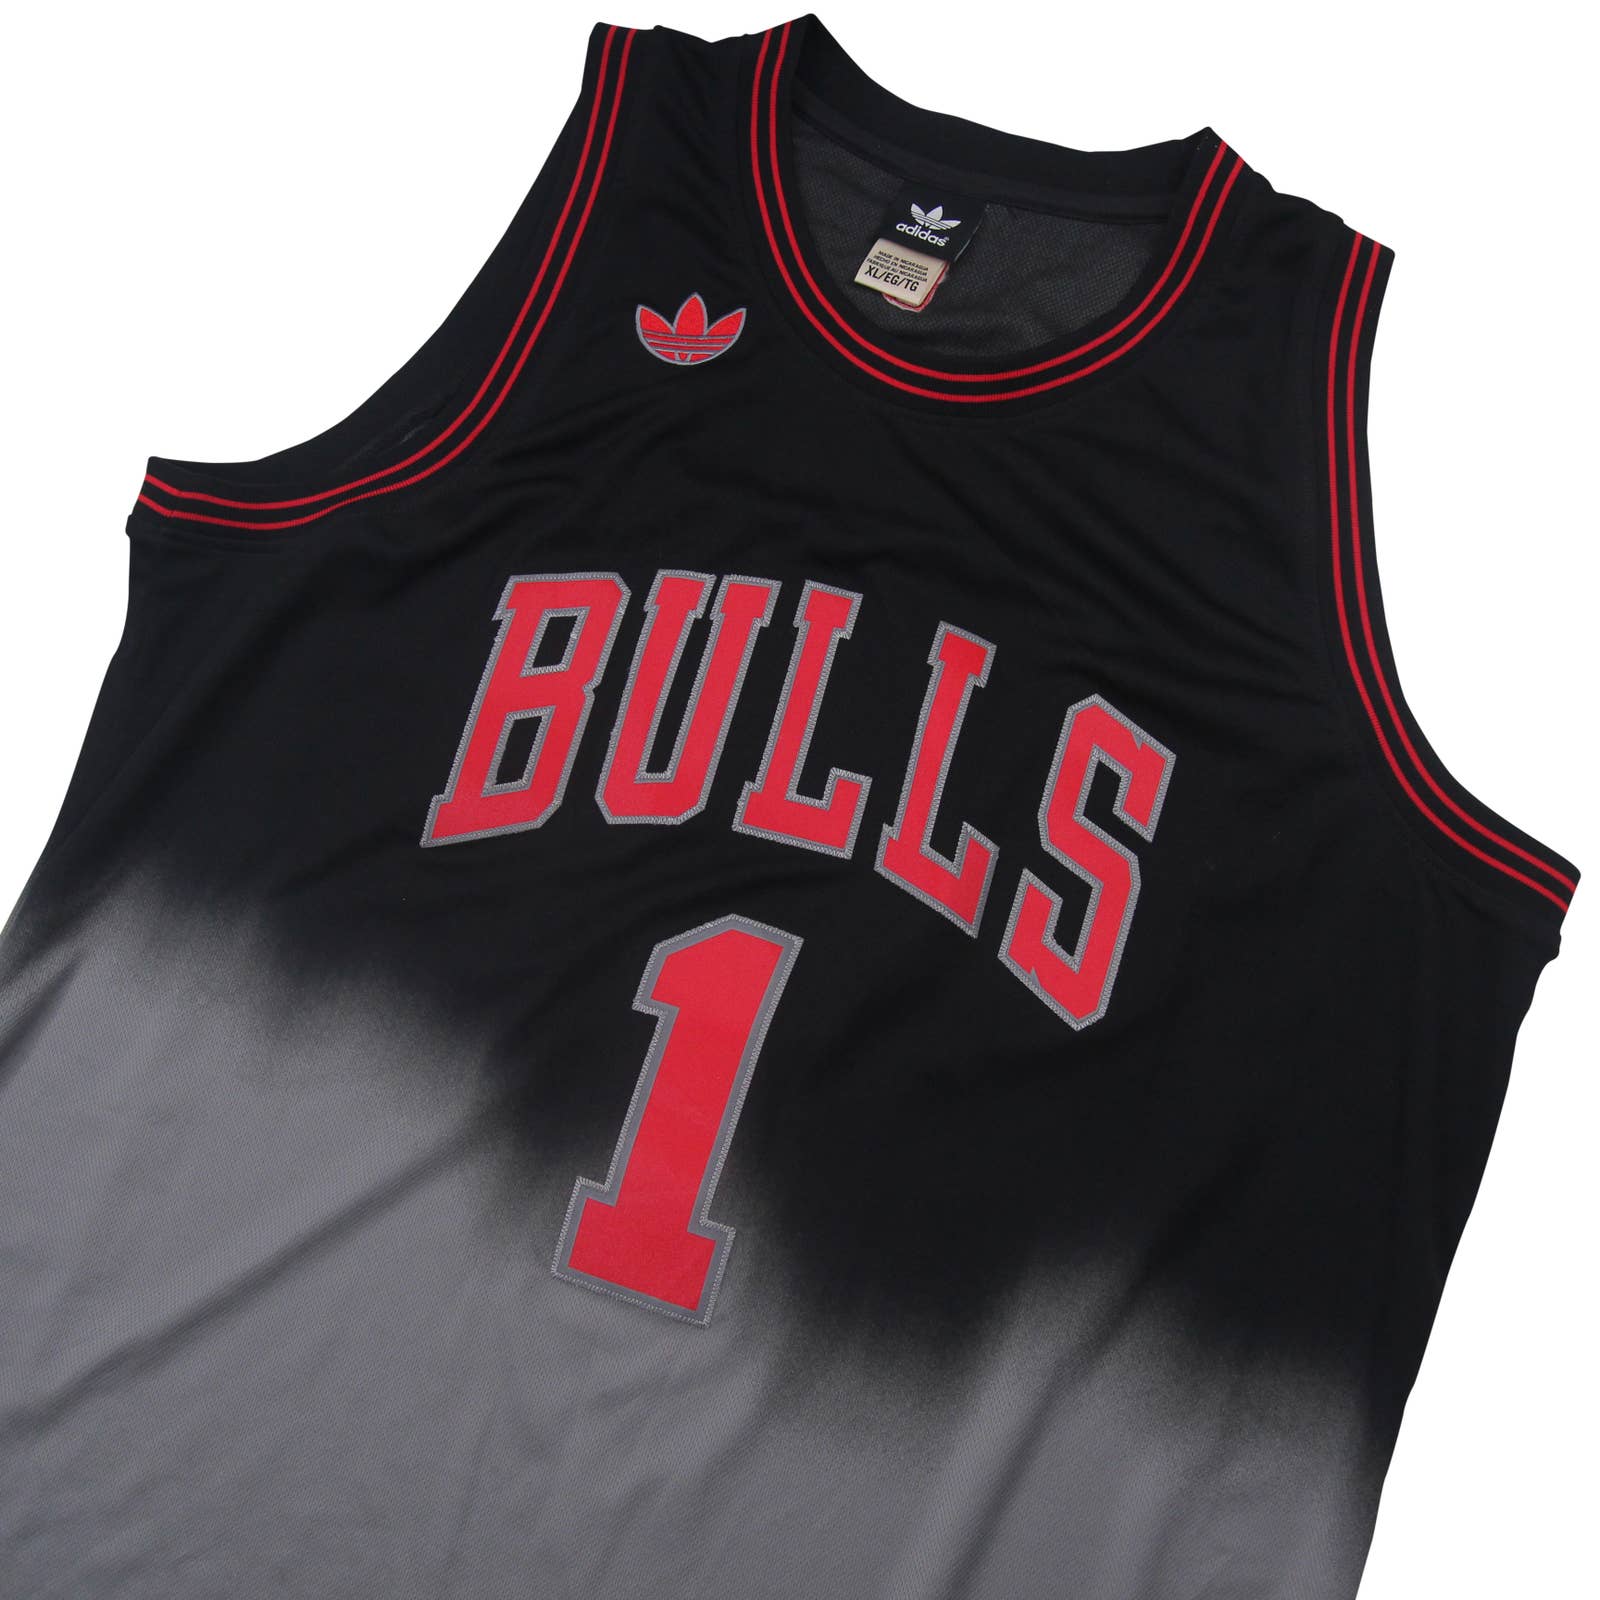 Derrick Rose bulls limited edition black jersey